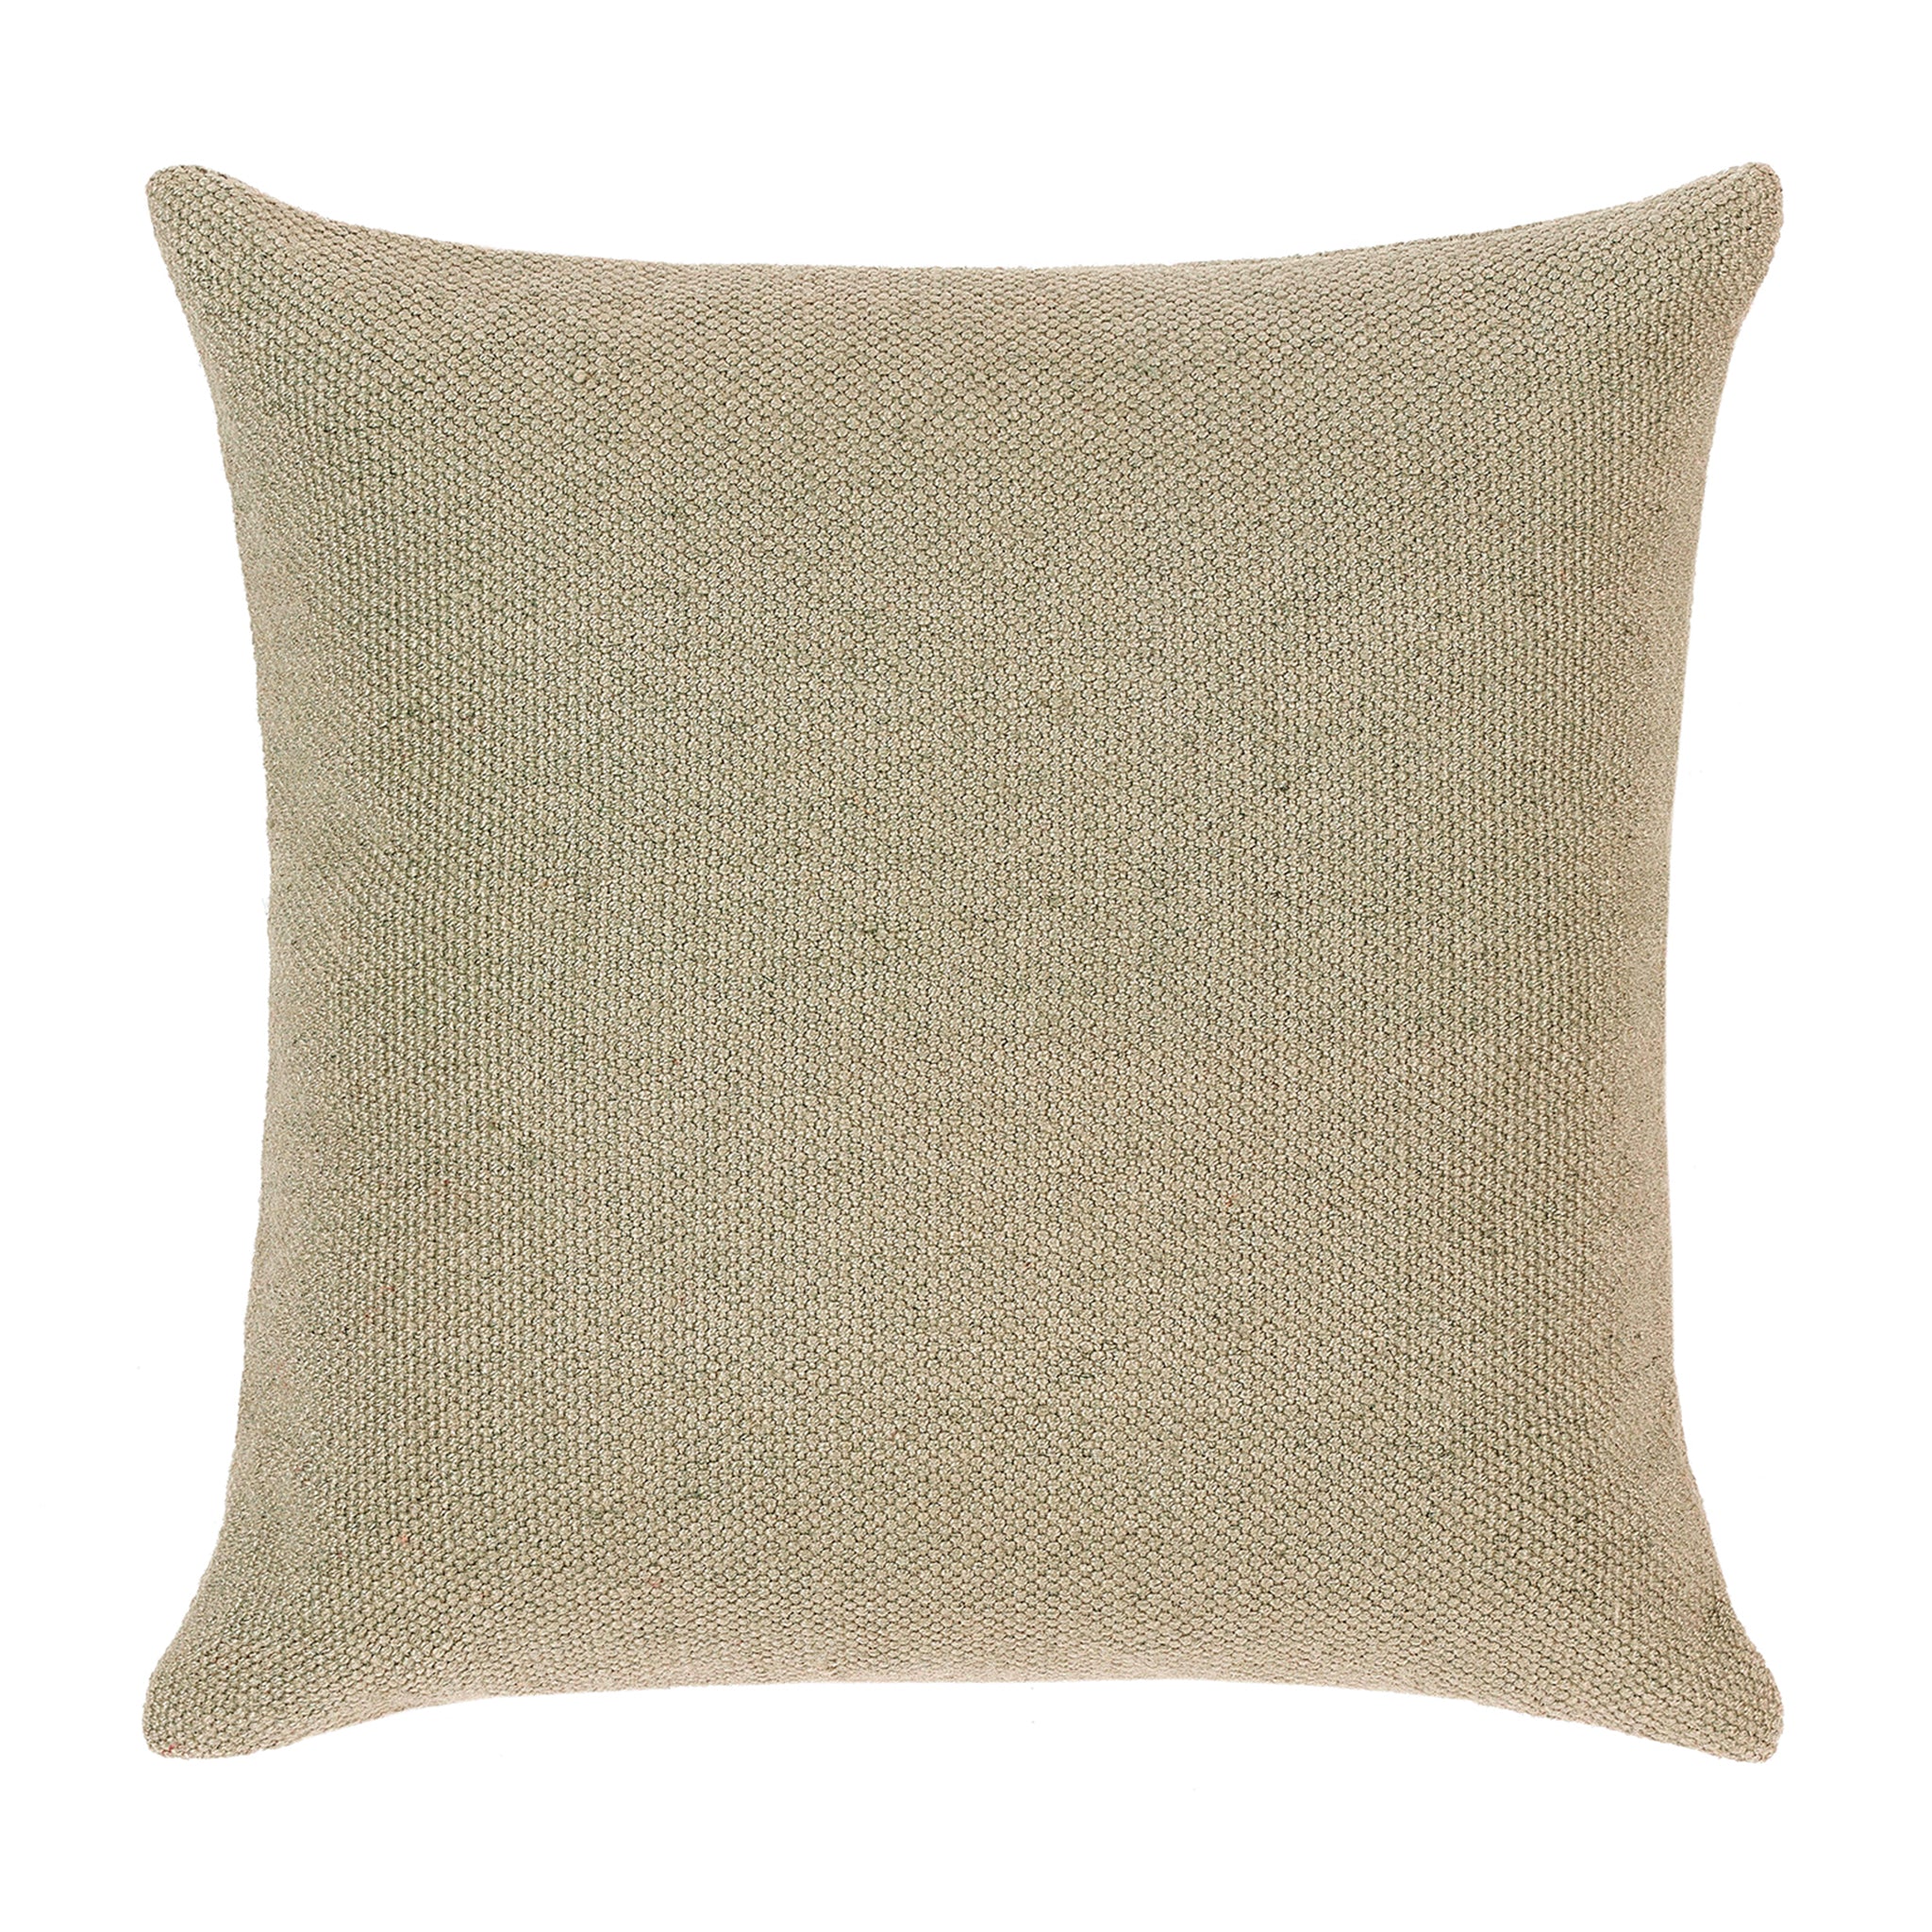 Natural plain cushion